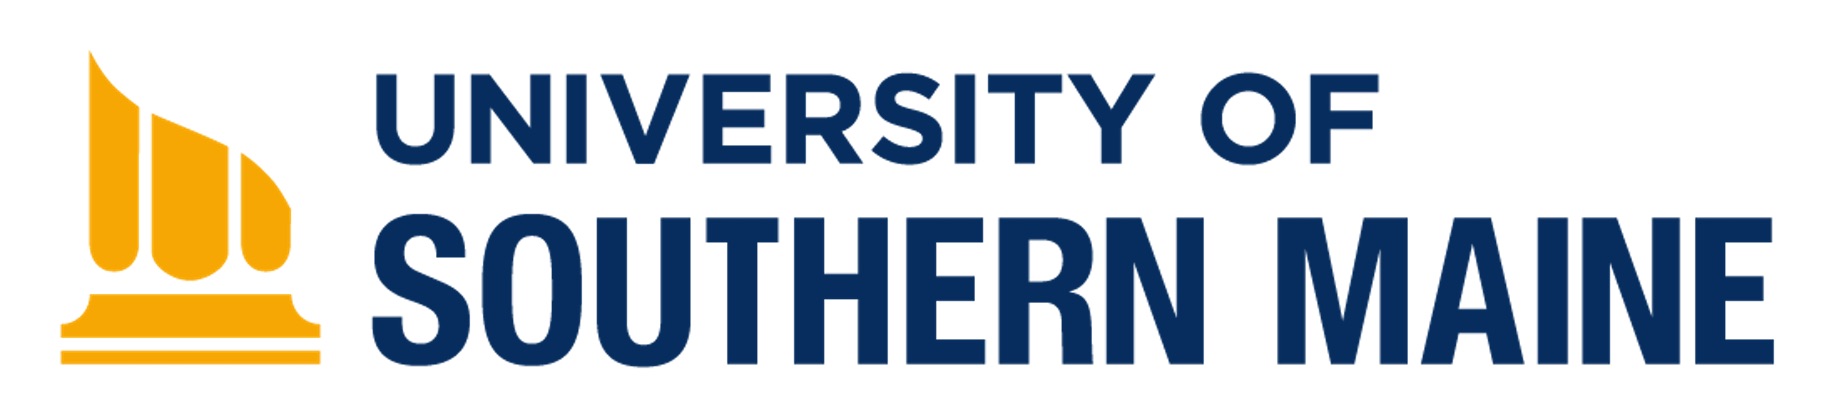 University_of_Southern_Maine_Classic_Logo.jpg